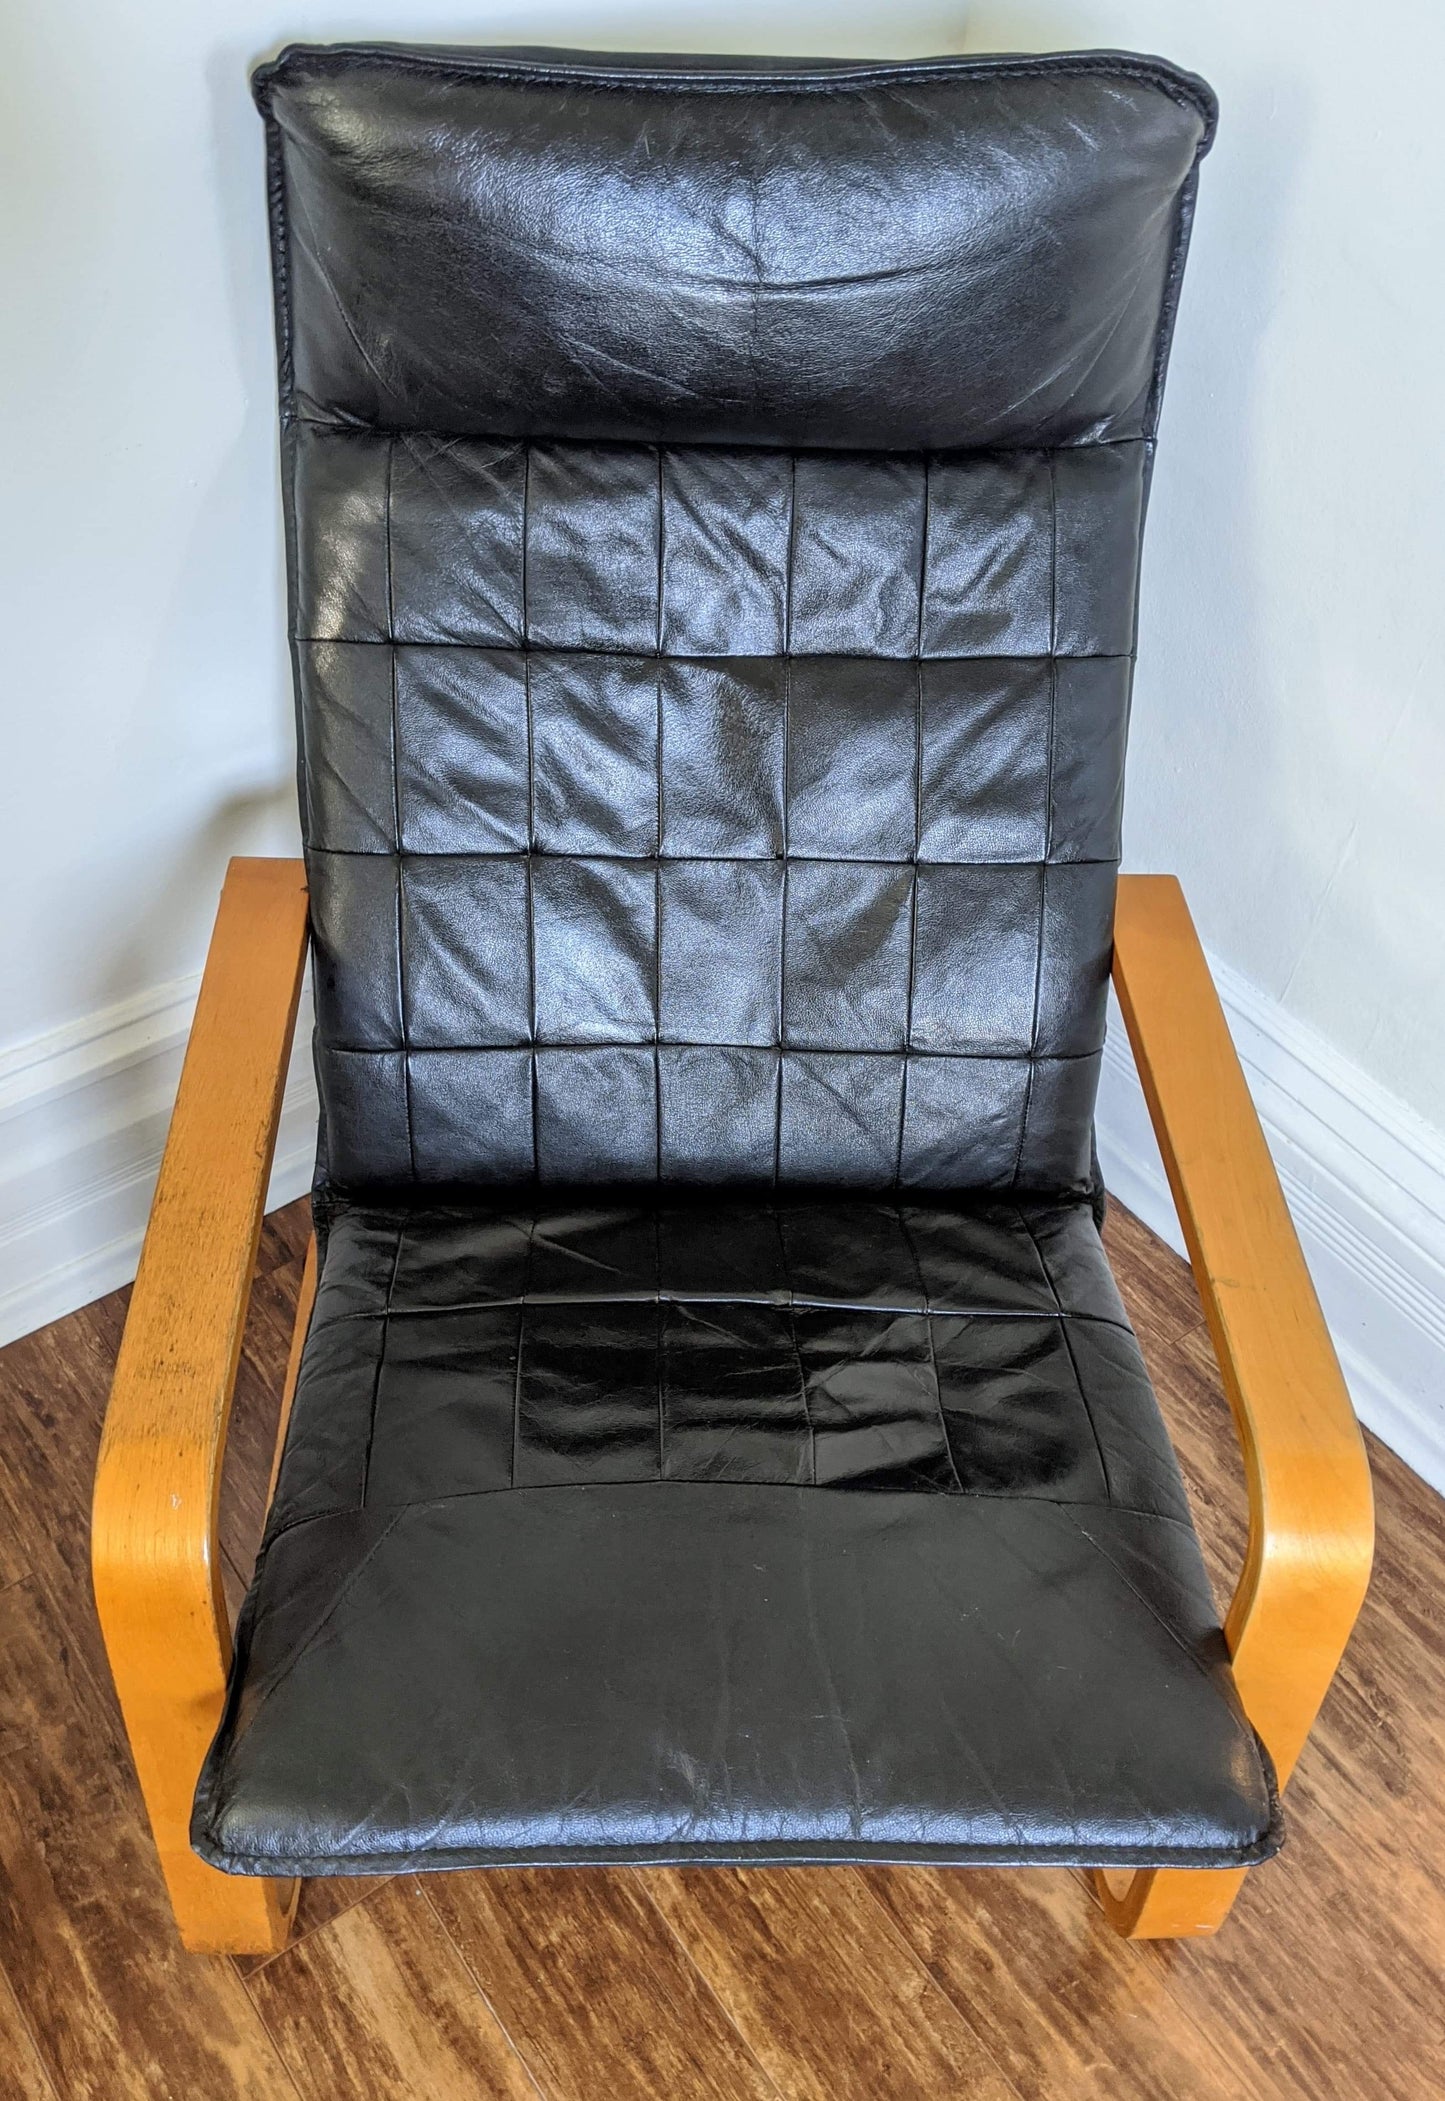 The Laidback Chair lll